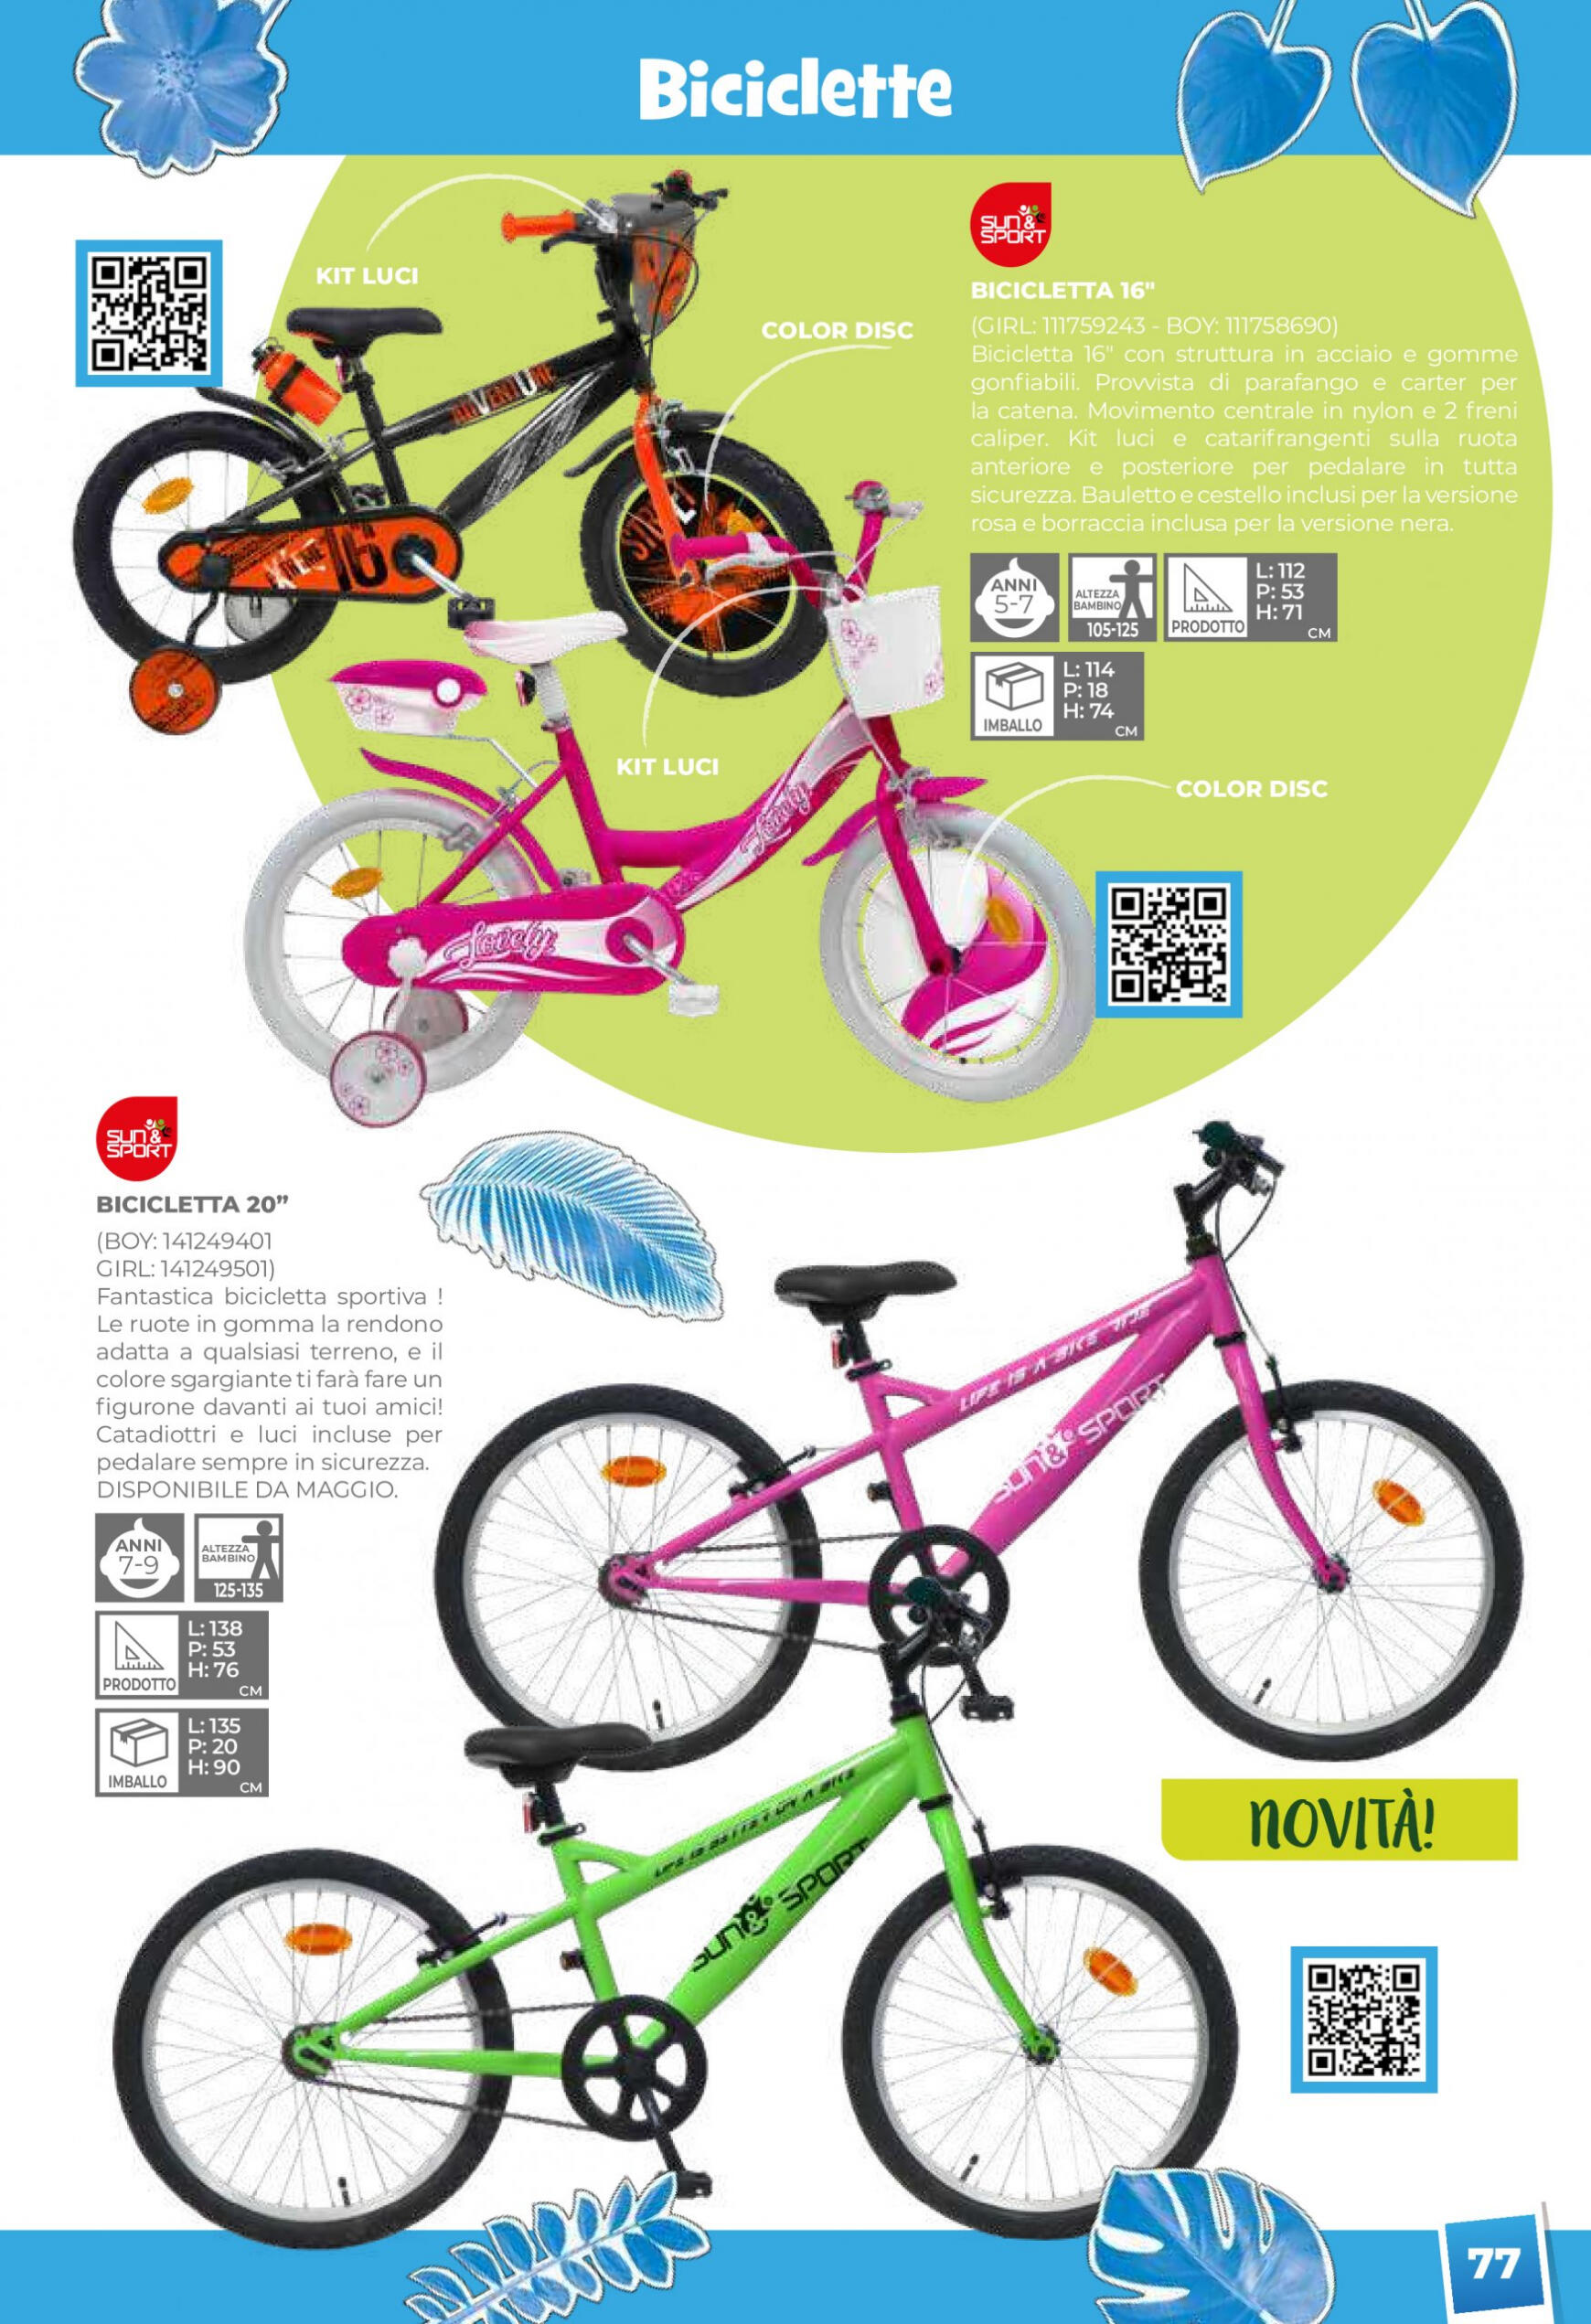 toys-center - Nuovo volantino Toys Center 01.05. - 31.12. - page: 79